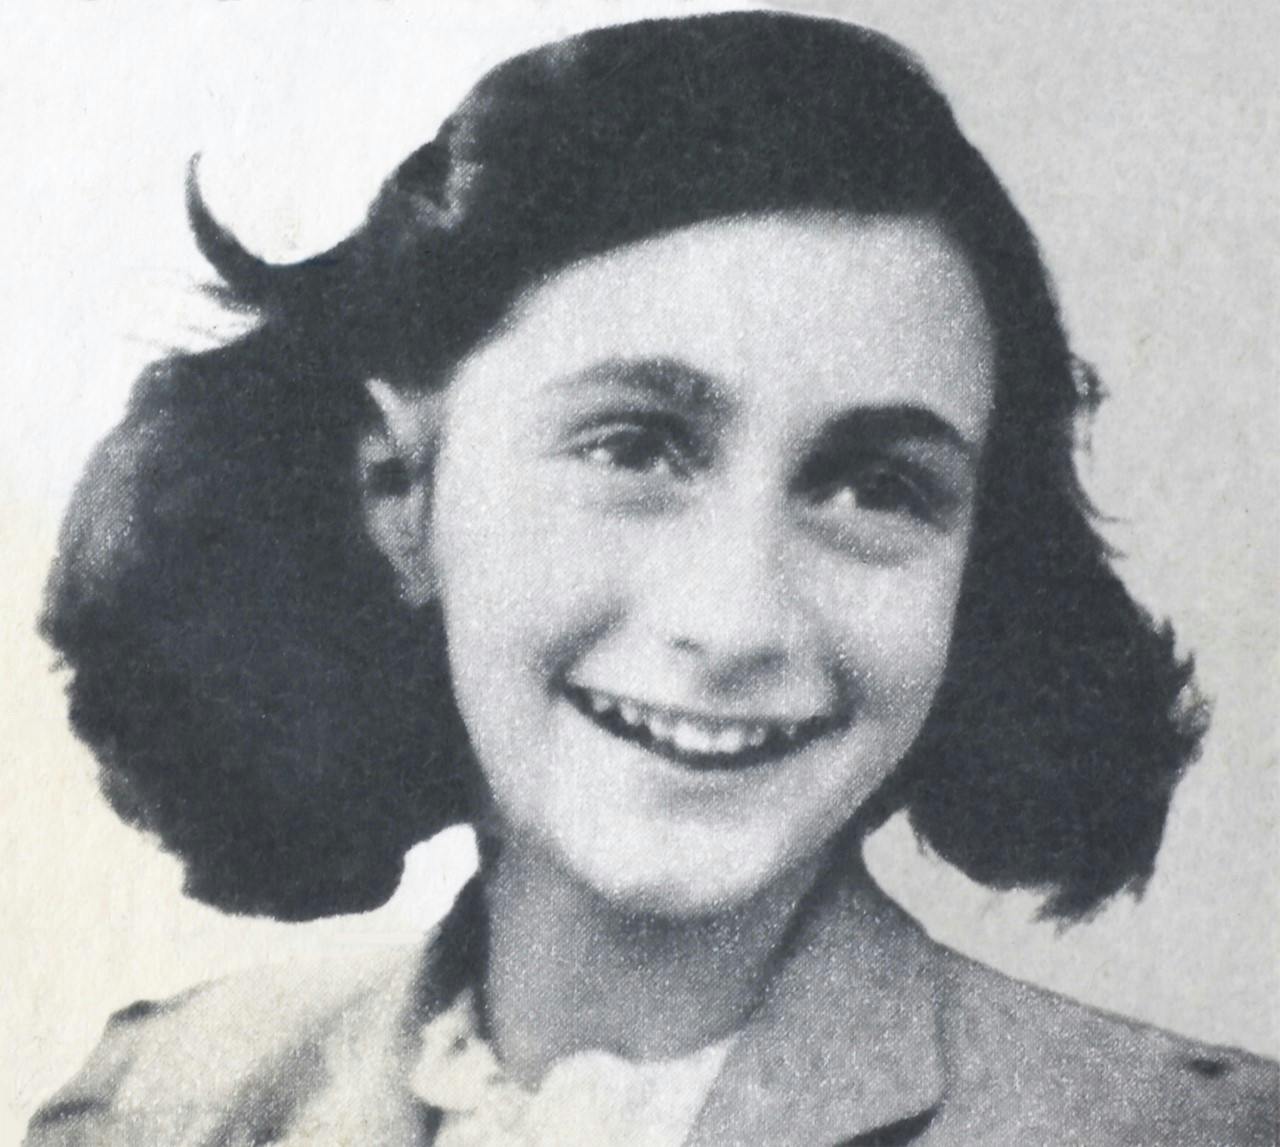 Het dagboek van Anne Frank